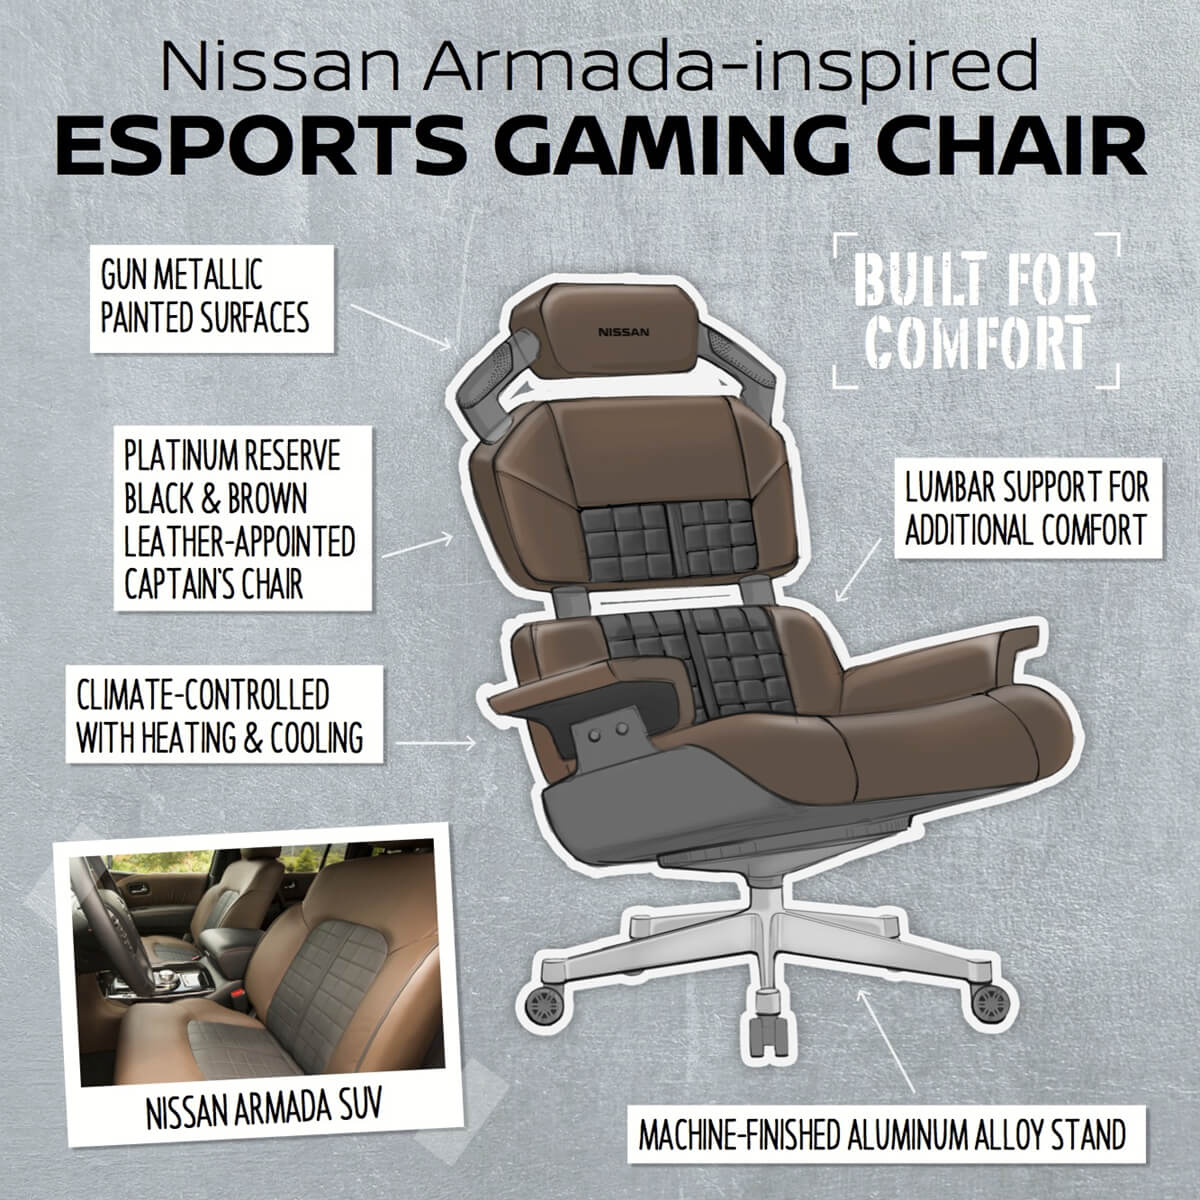 Ultimate-esports-gaming-chairs-Armada-source.jpg